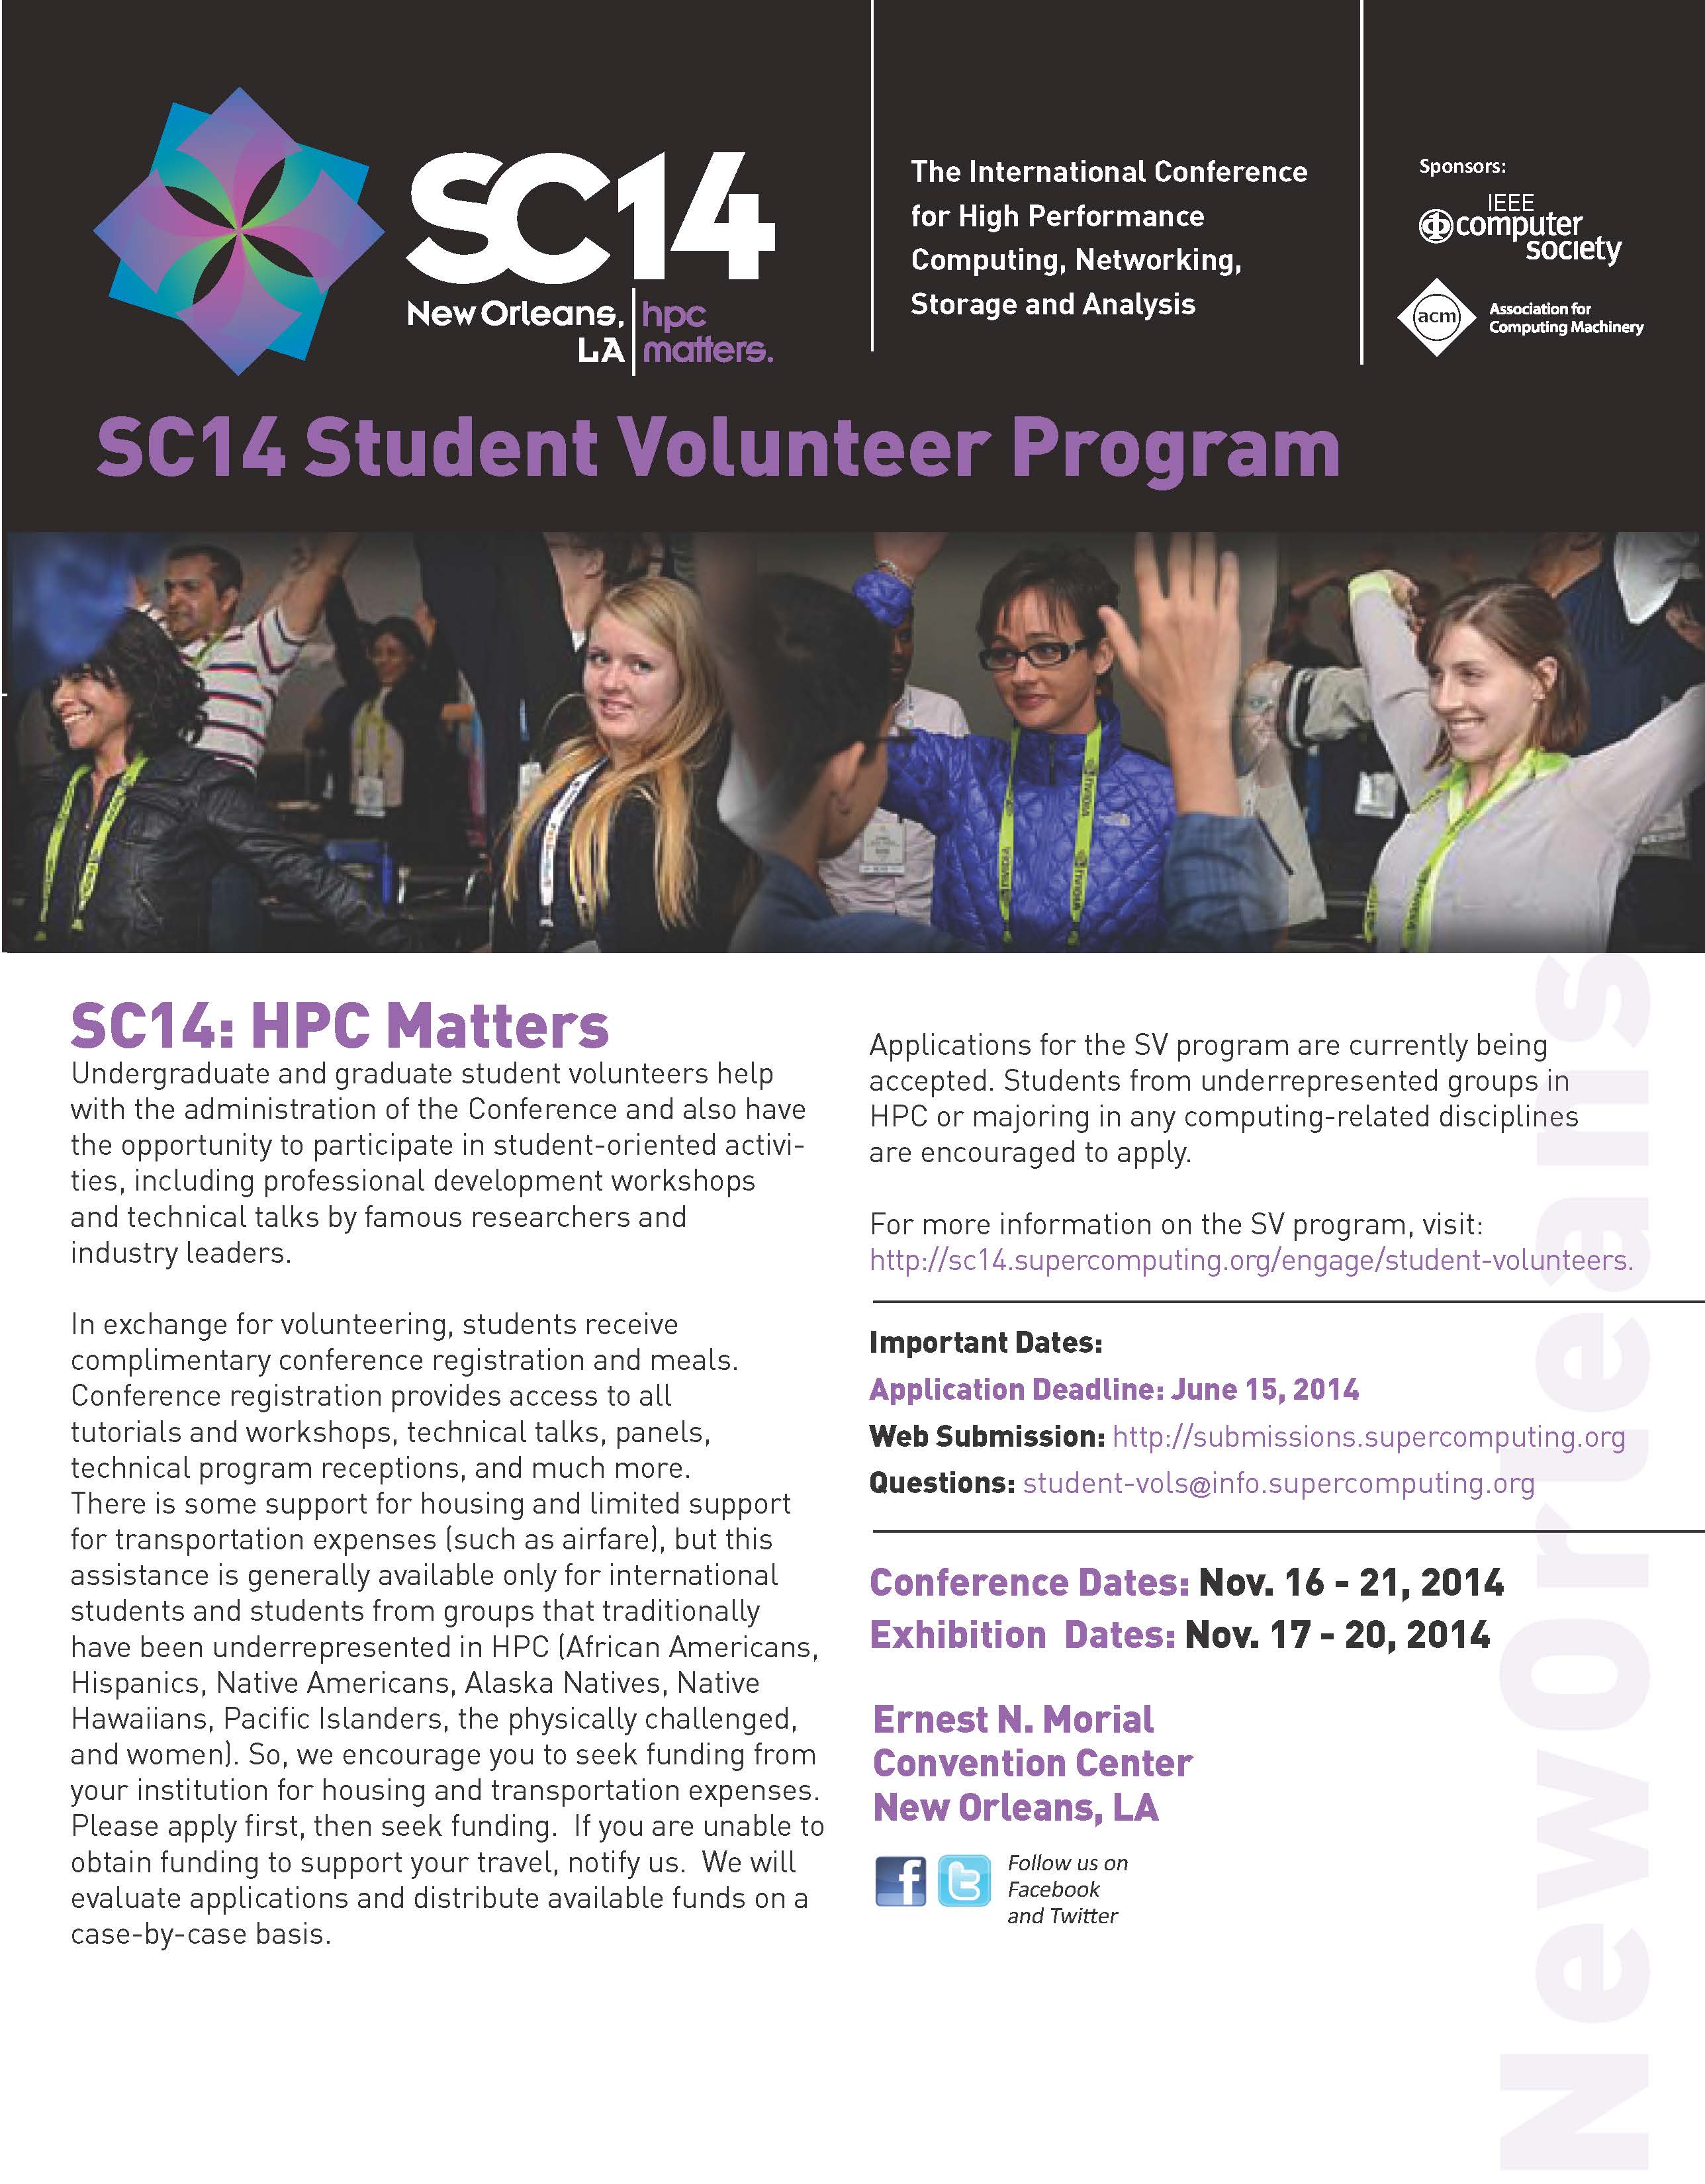 Flyer image for SC14 student volunteer program in New Orleans 